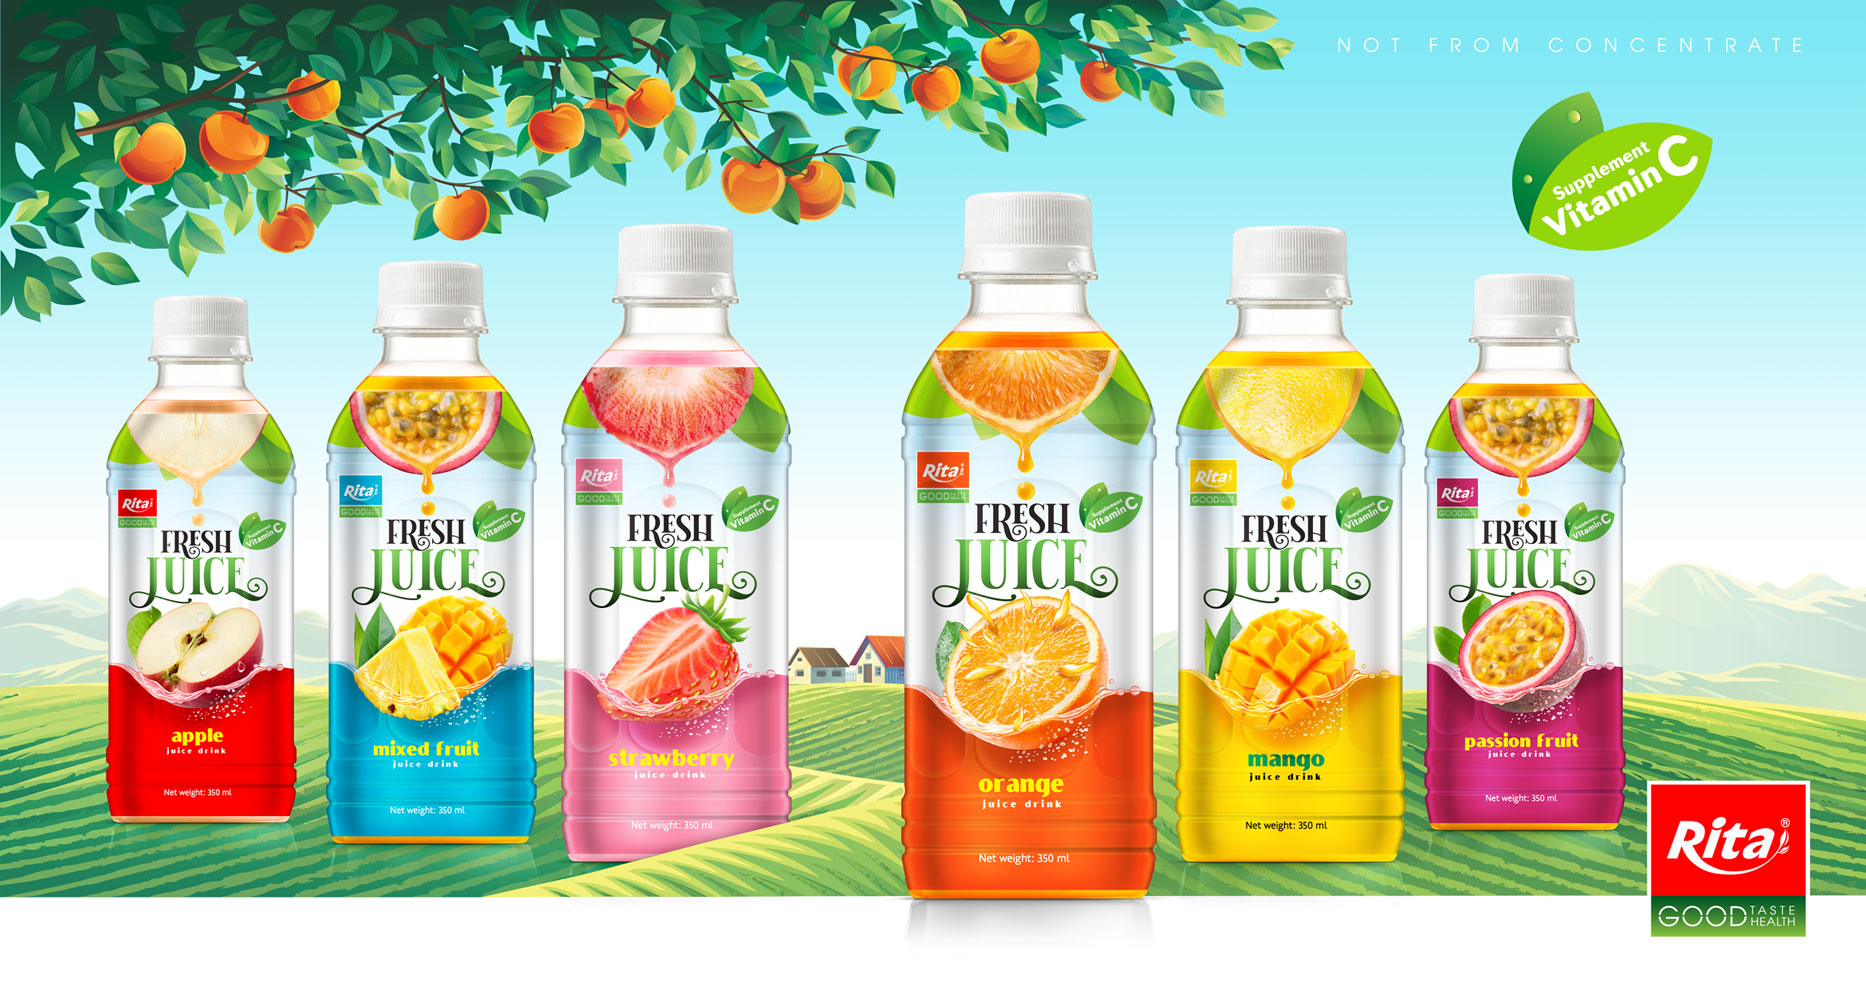 350ml Pet bottle fresh original tropical fruit juice